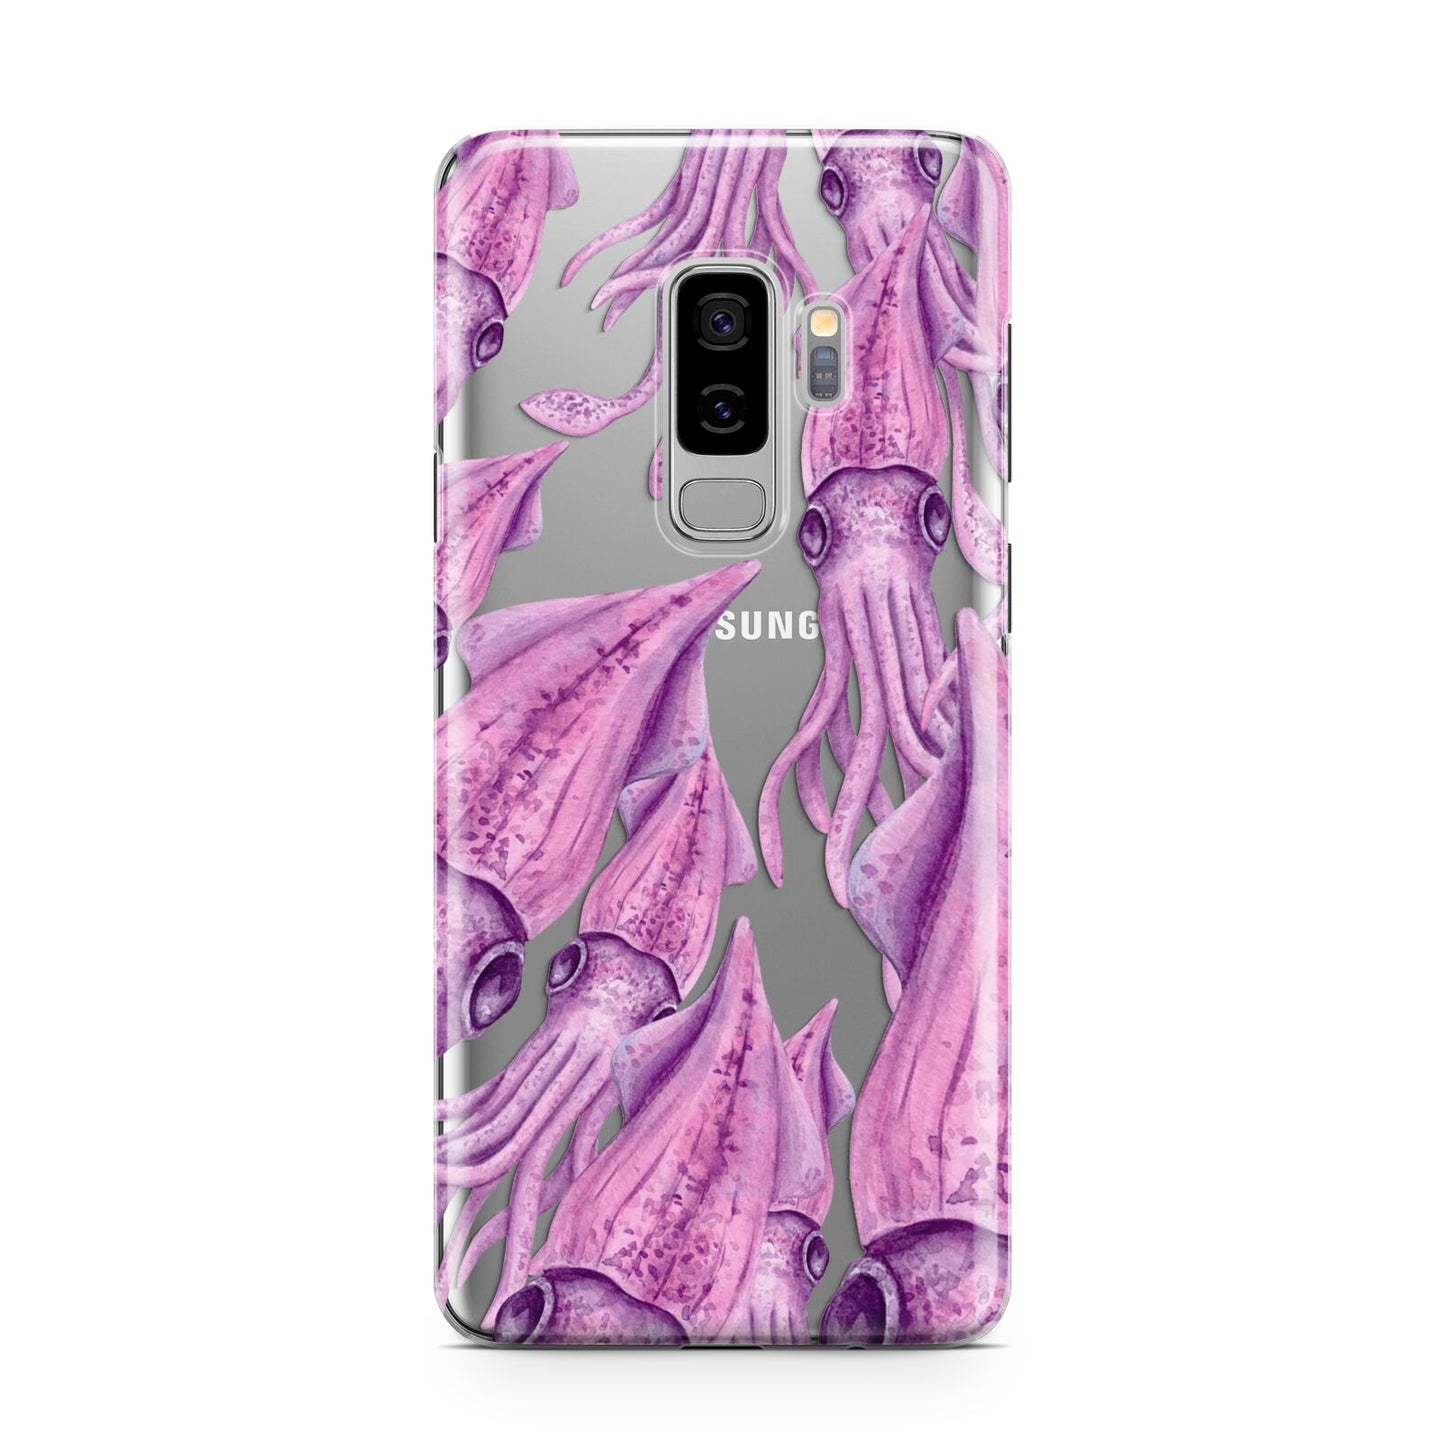 Squid Samsung Galaxy S9 Plus Case on Silver phone